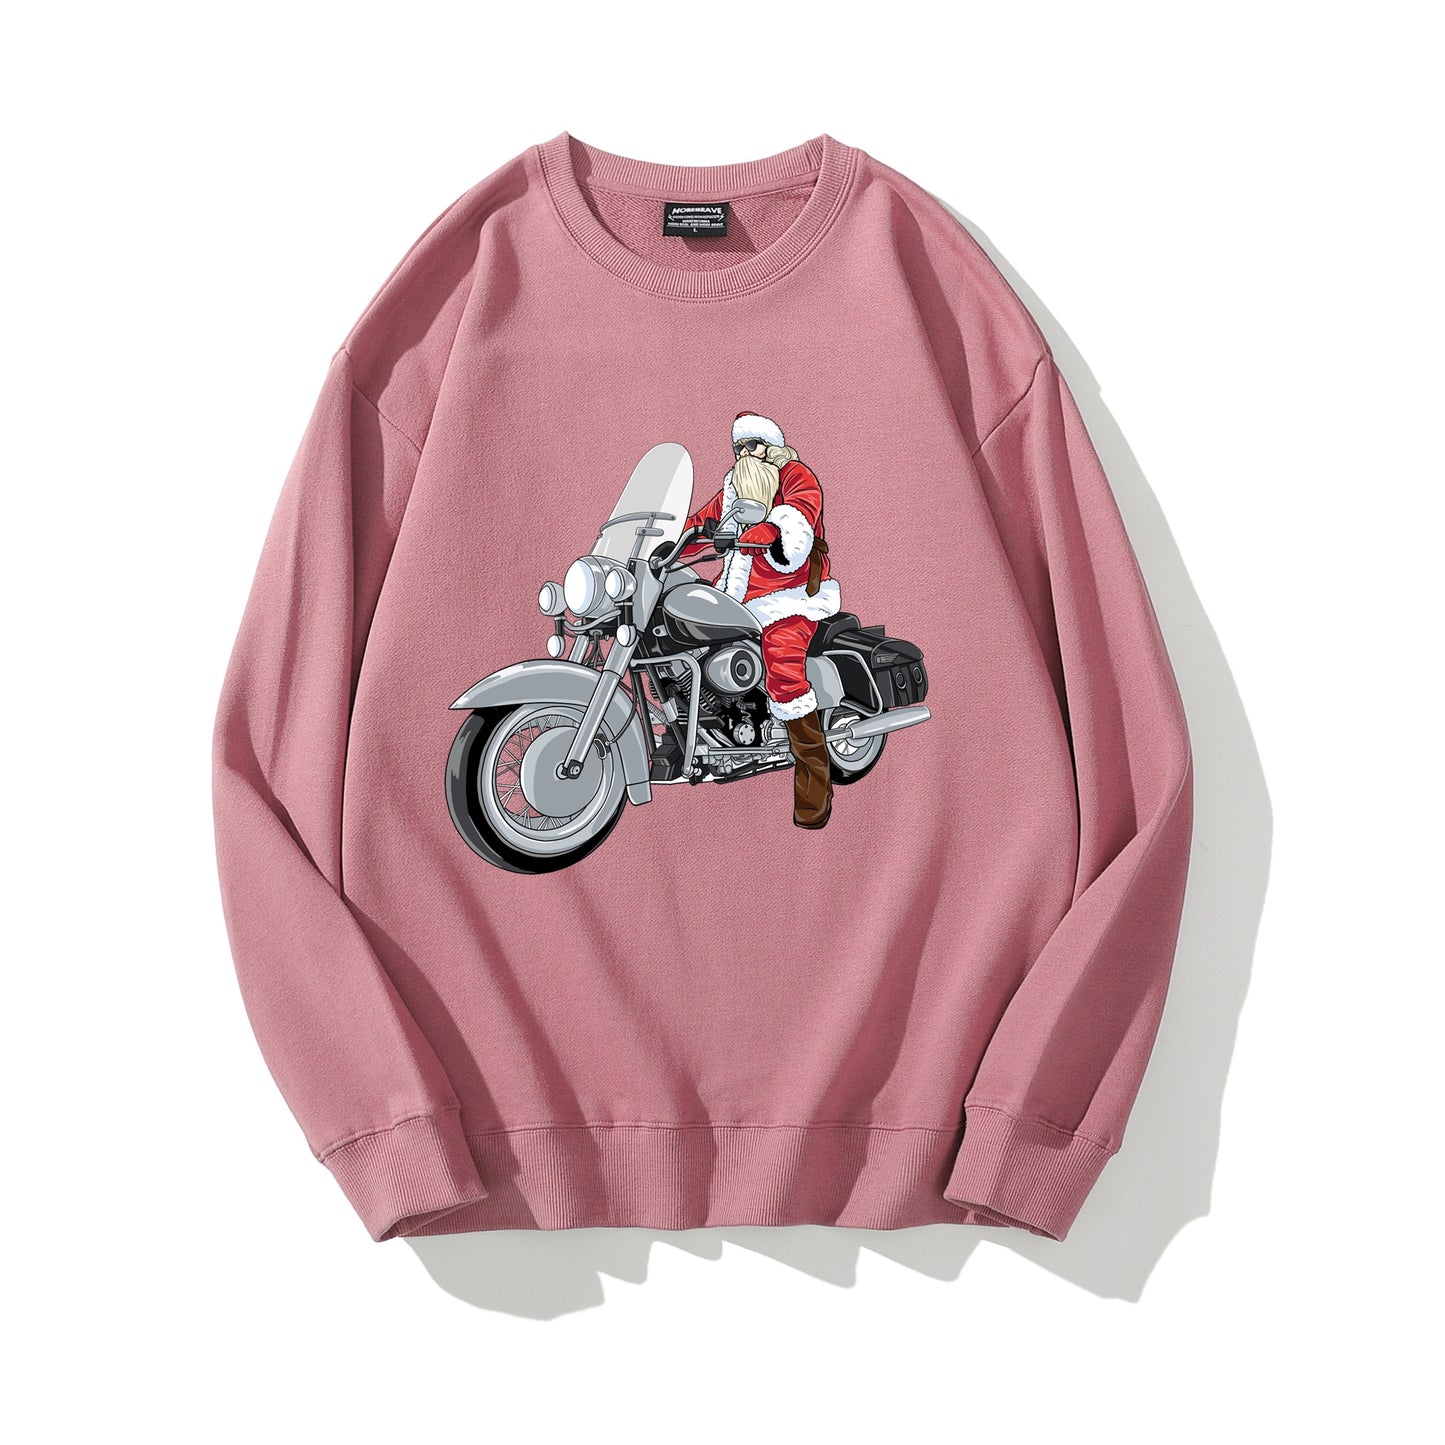 Santa Claus Ride Motorcycle Crewneck Sweatshirt Cute Christmas Cotton Sweater